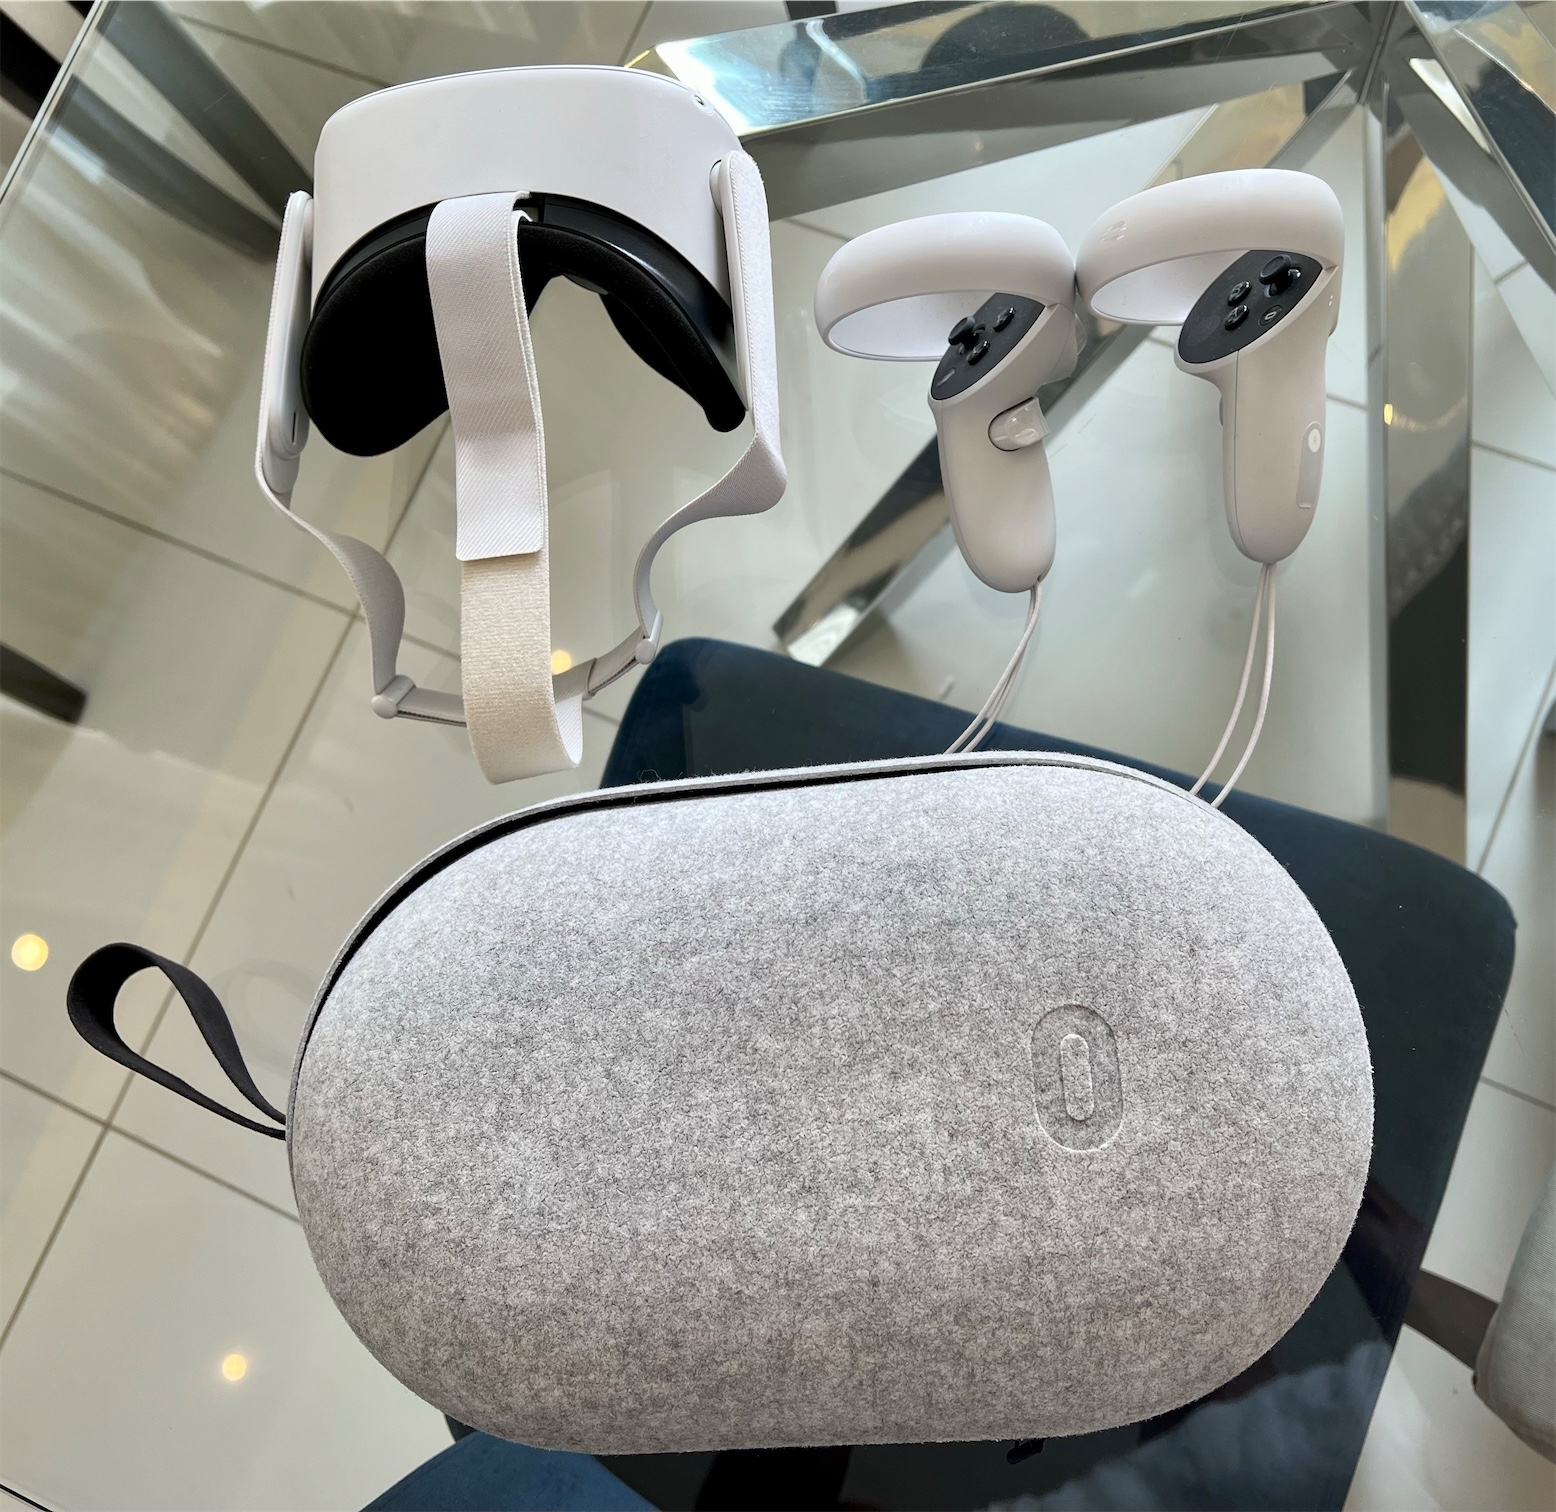 Meta Oculus Quest 2 Virtual Reality Headset como nuevo!